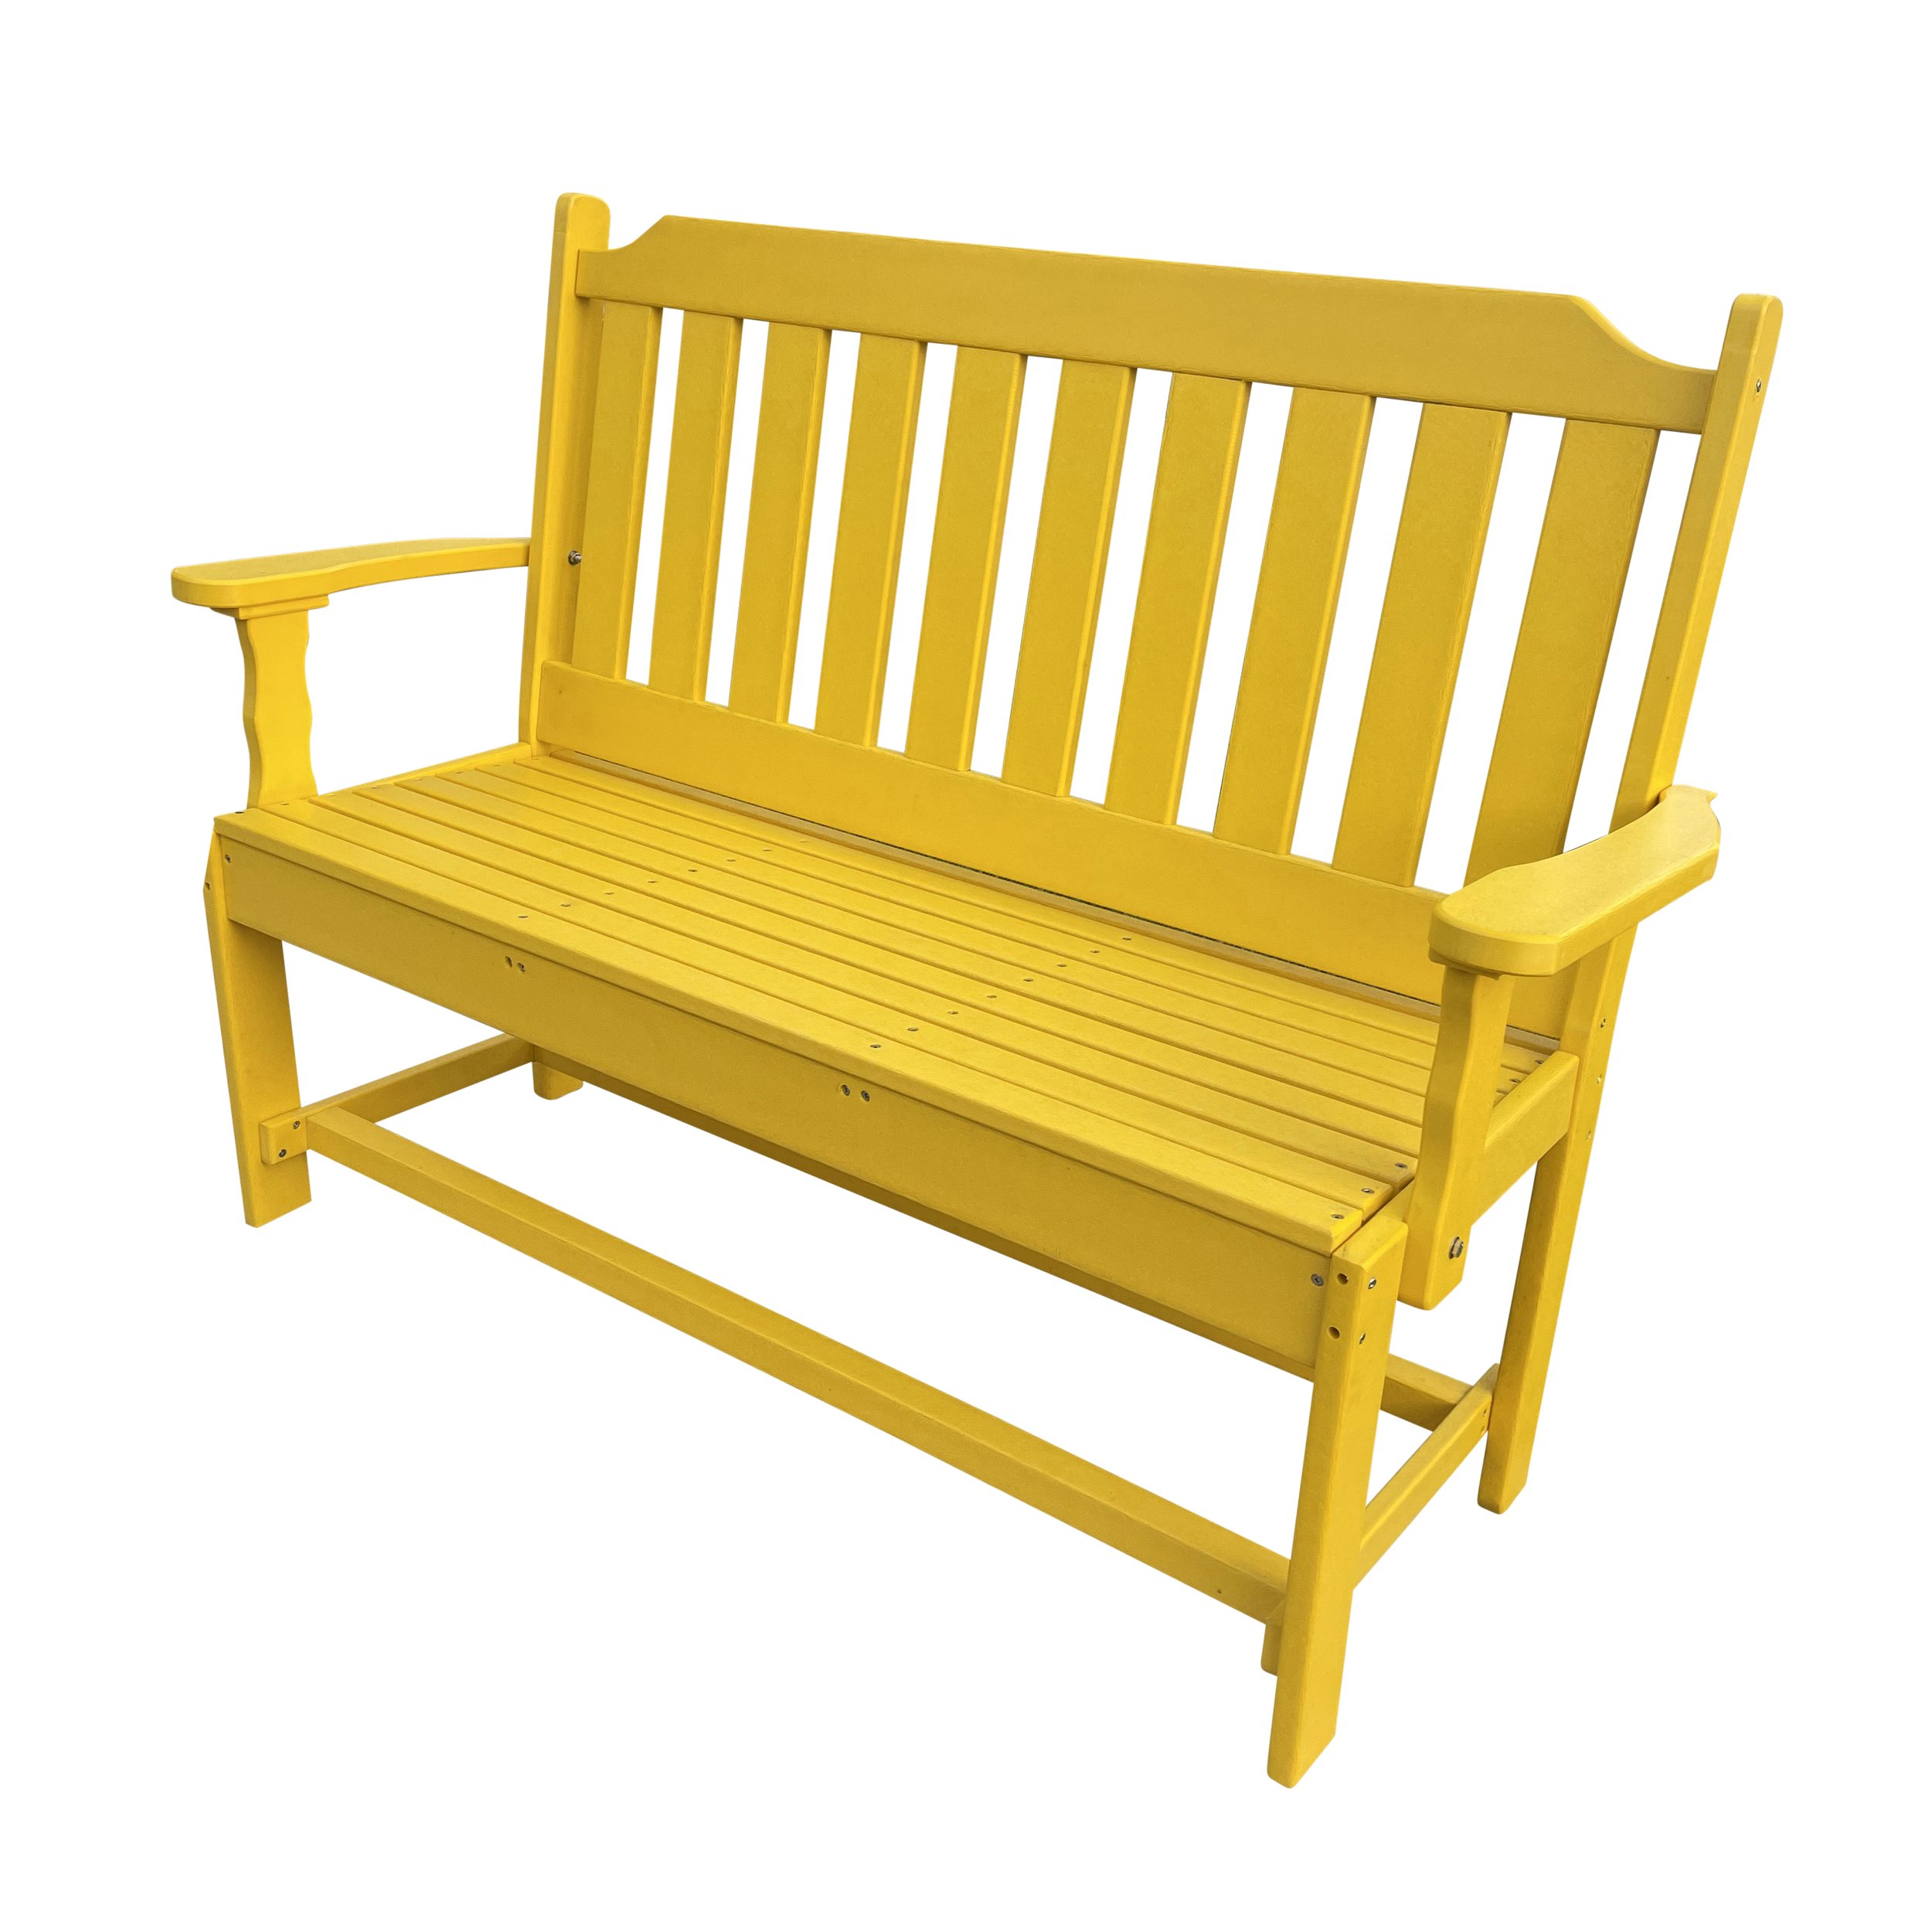 Garden bench | Yellow.jpg